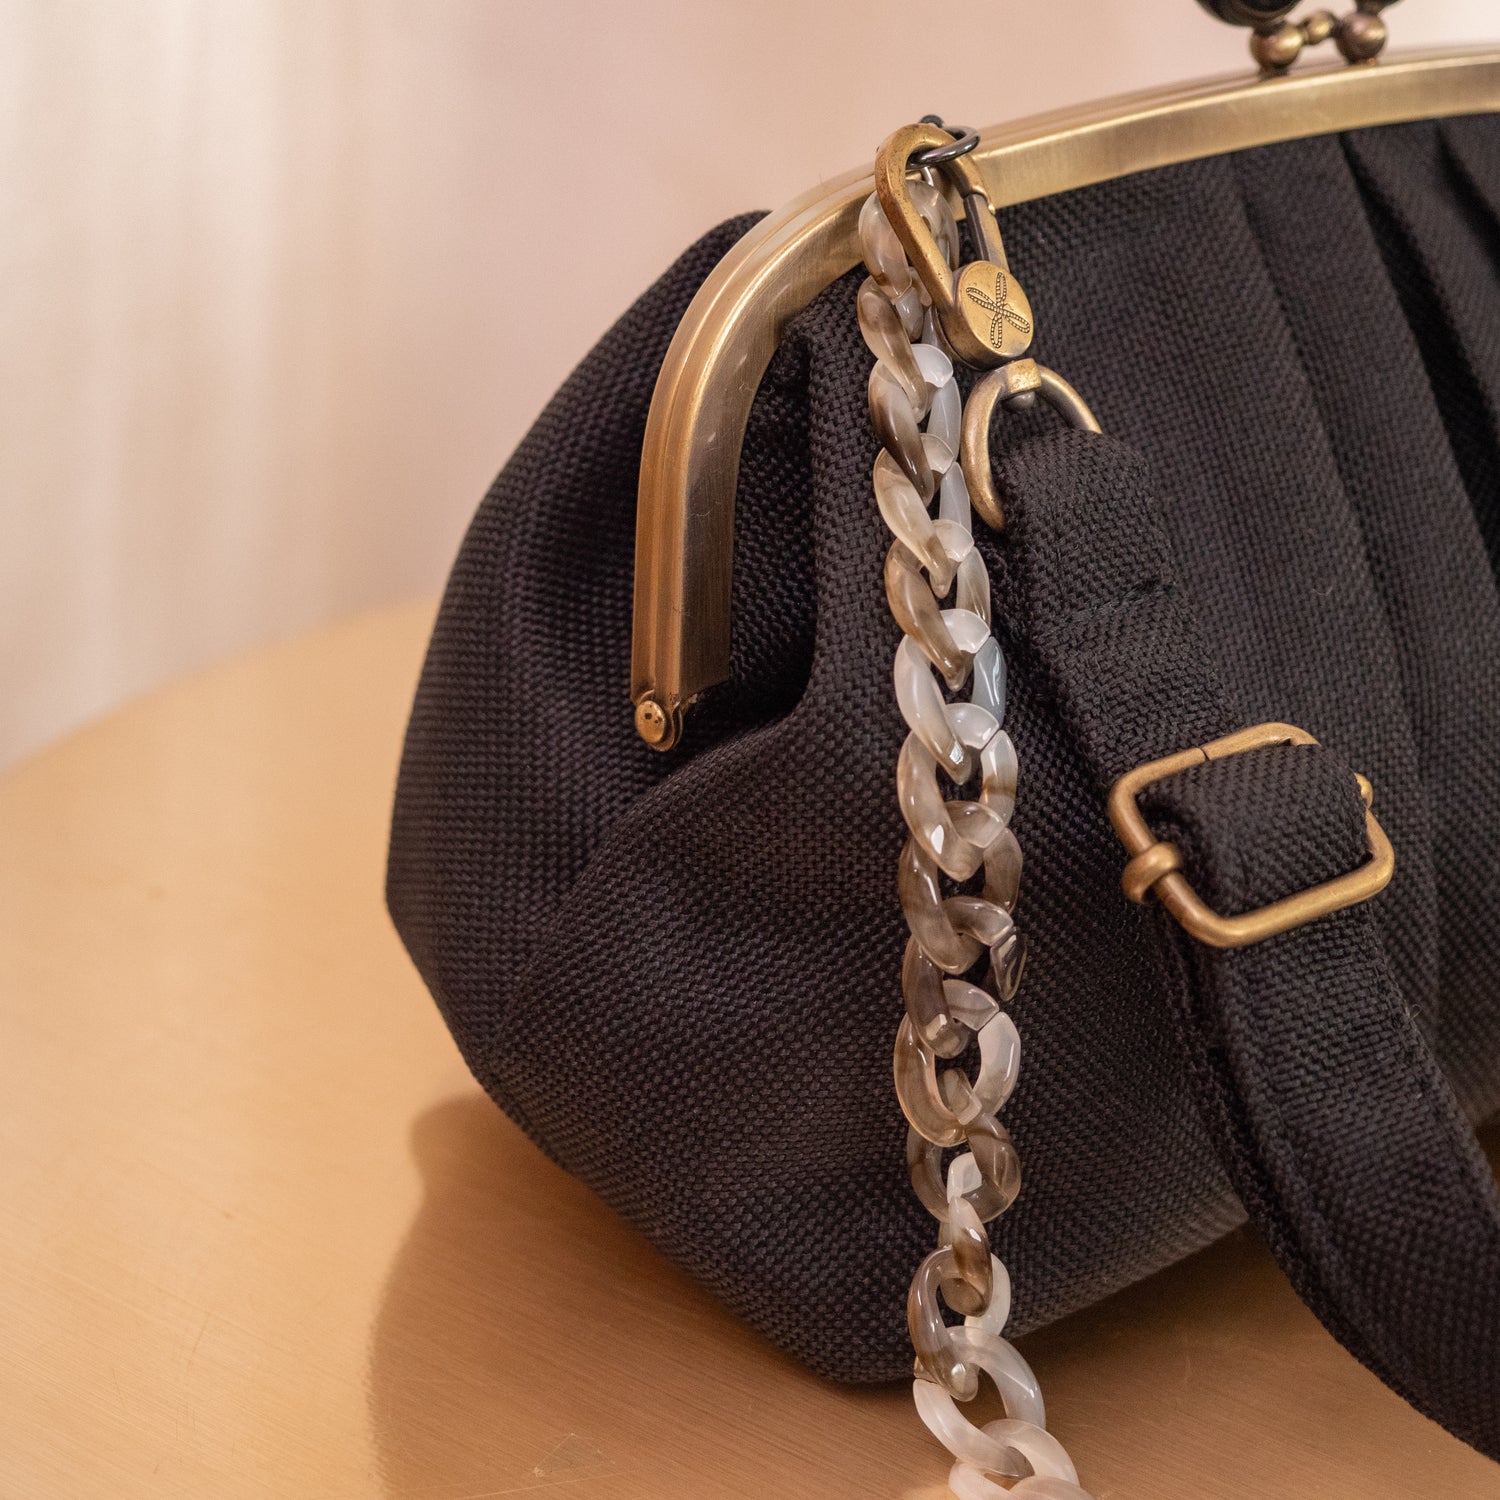 Handmade fabric purse with - Gem